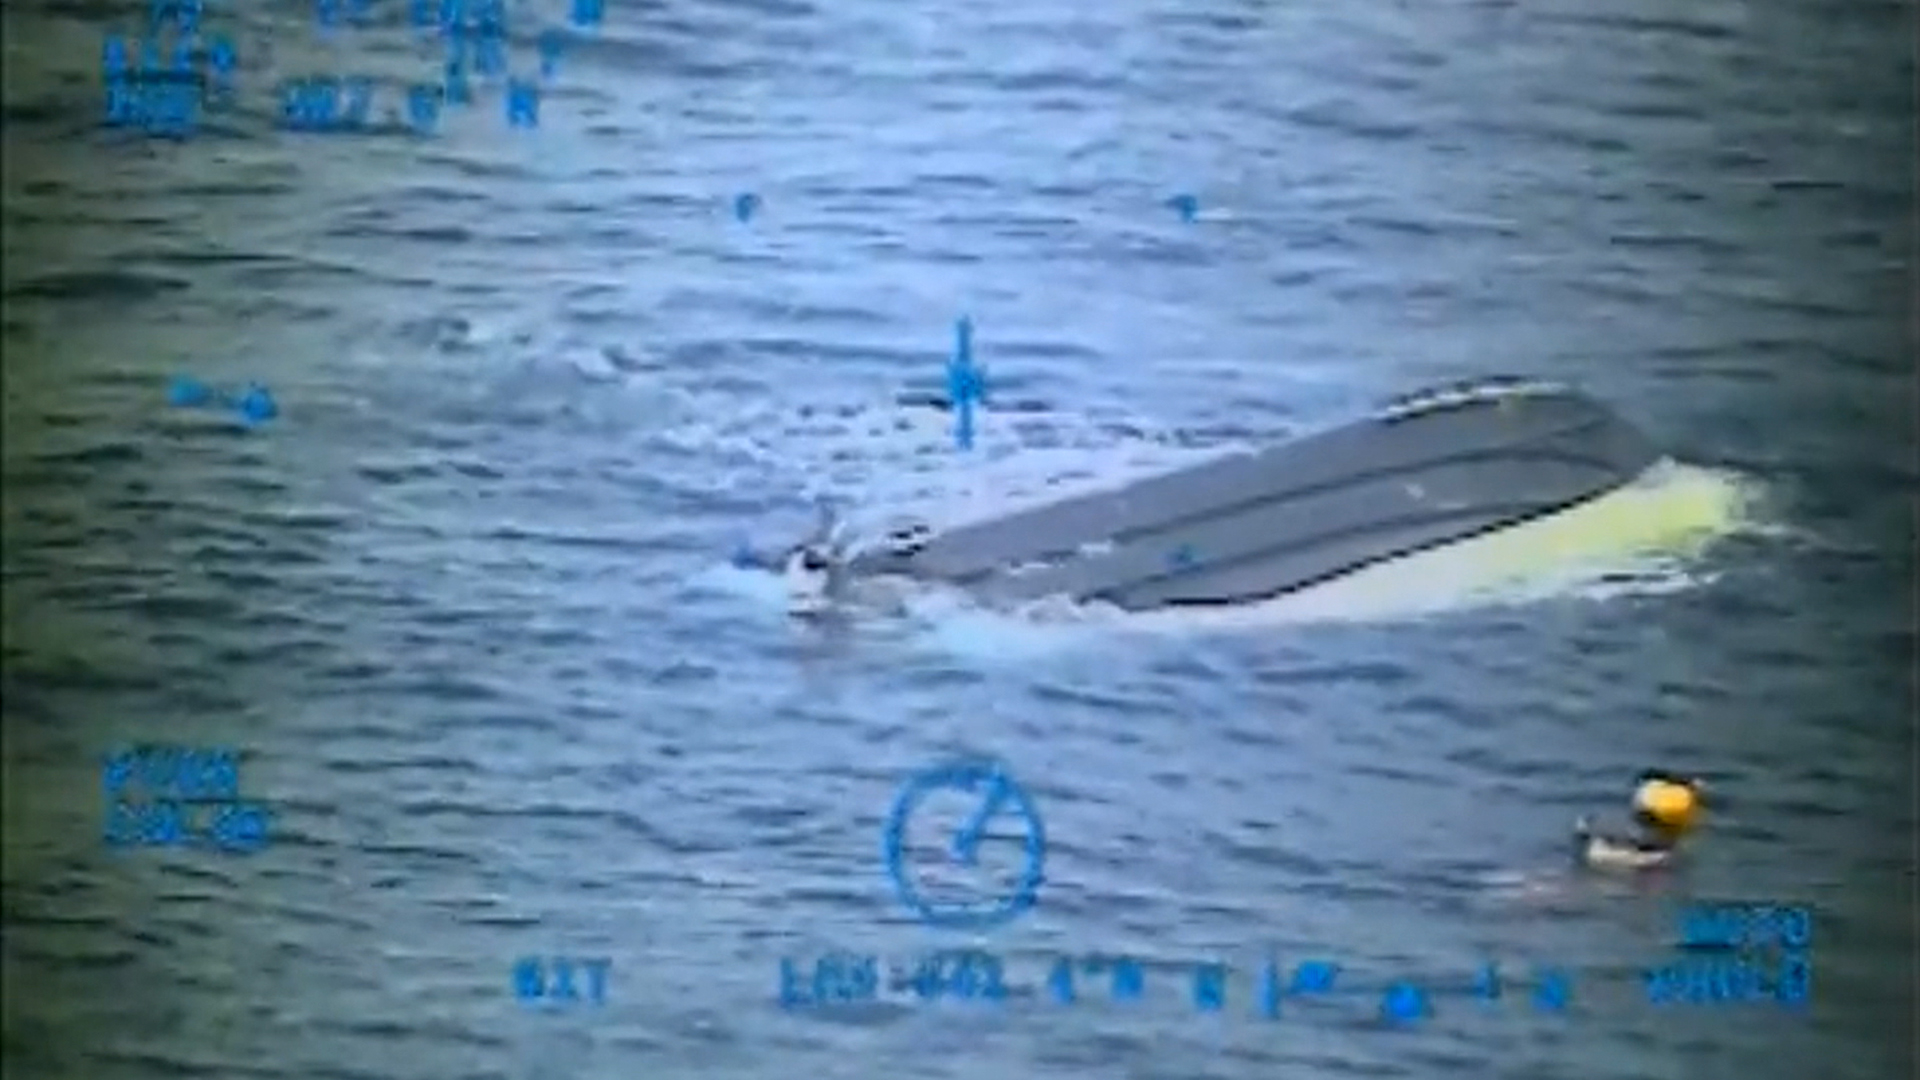 Florida Teens Missing at Sea: First Look at Capsized Boat 